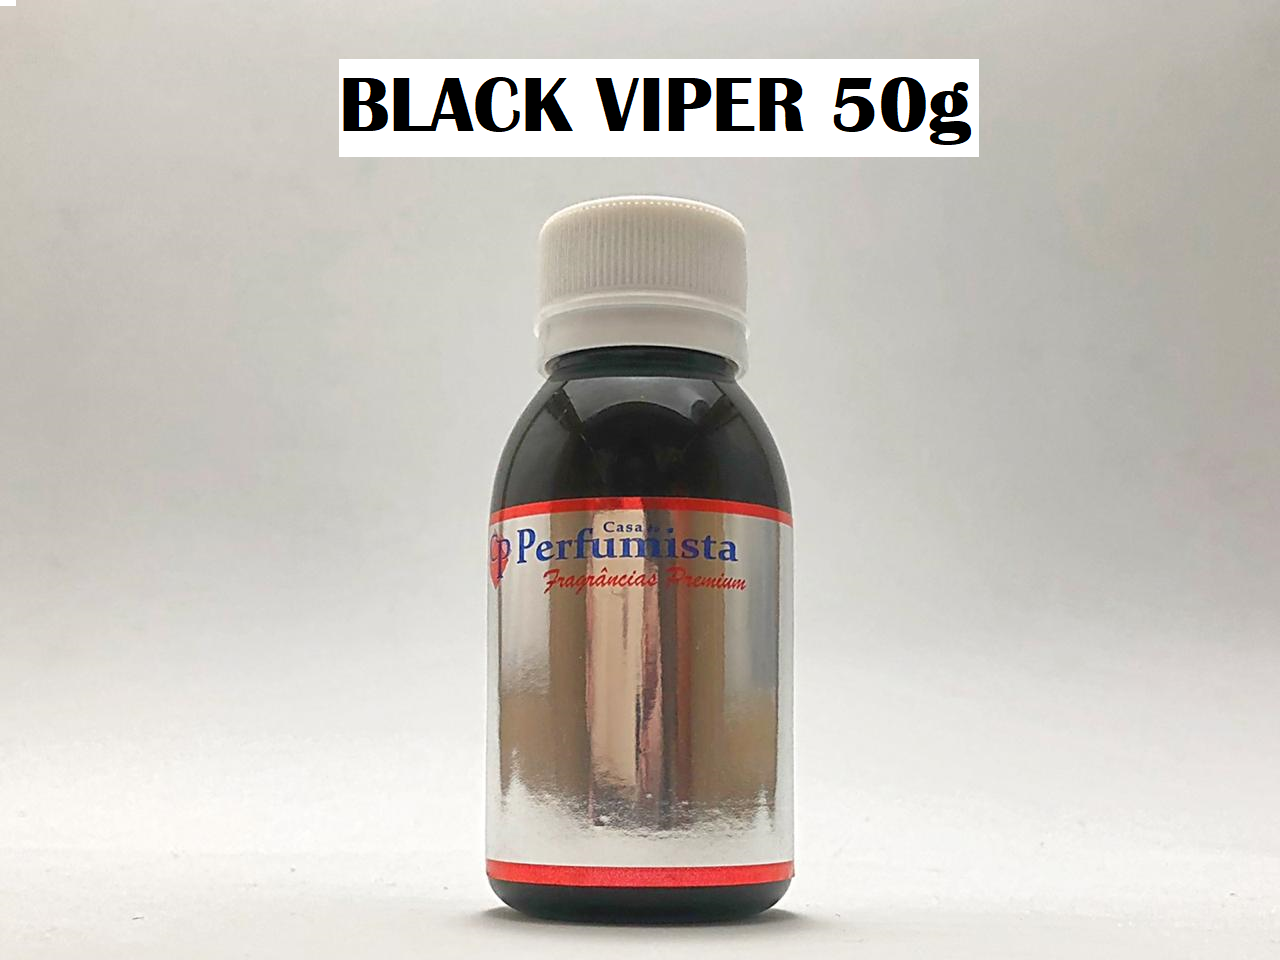 BLACK VIPER 50g - Inspiração: 212 VIP Black 